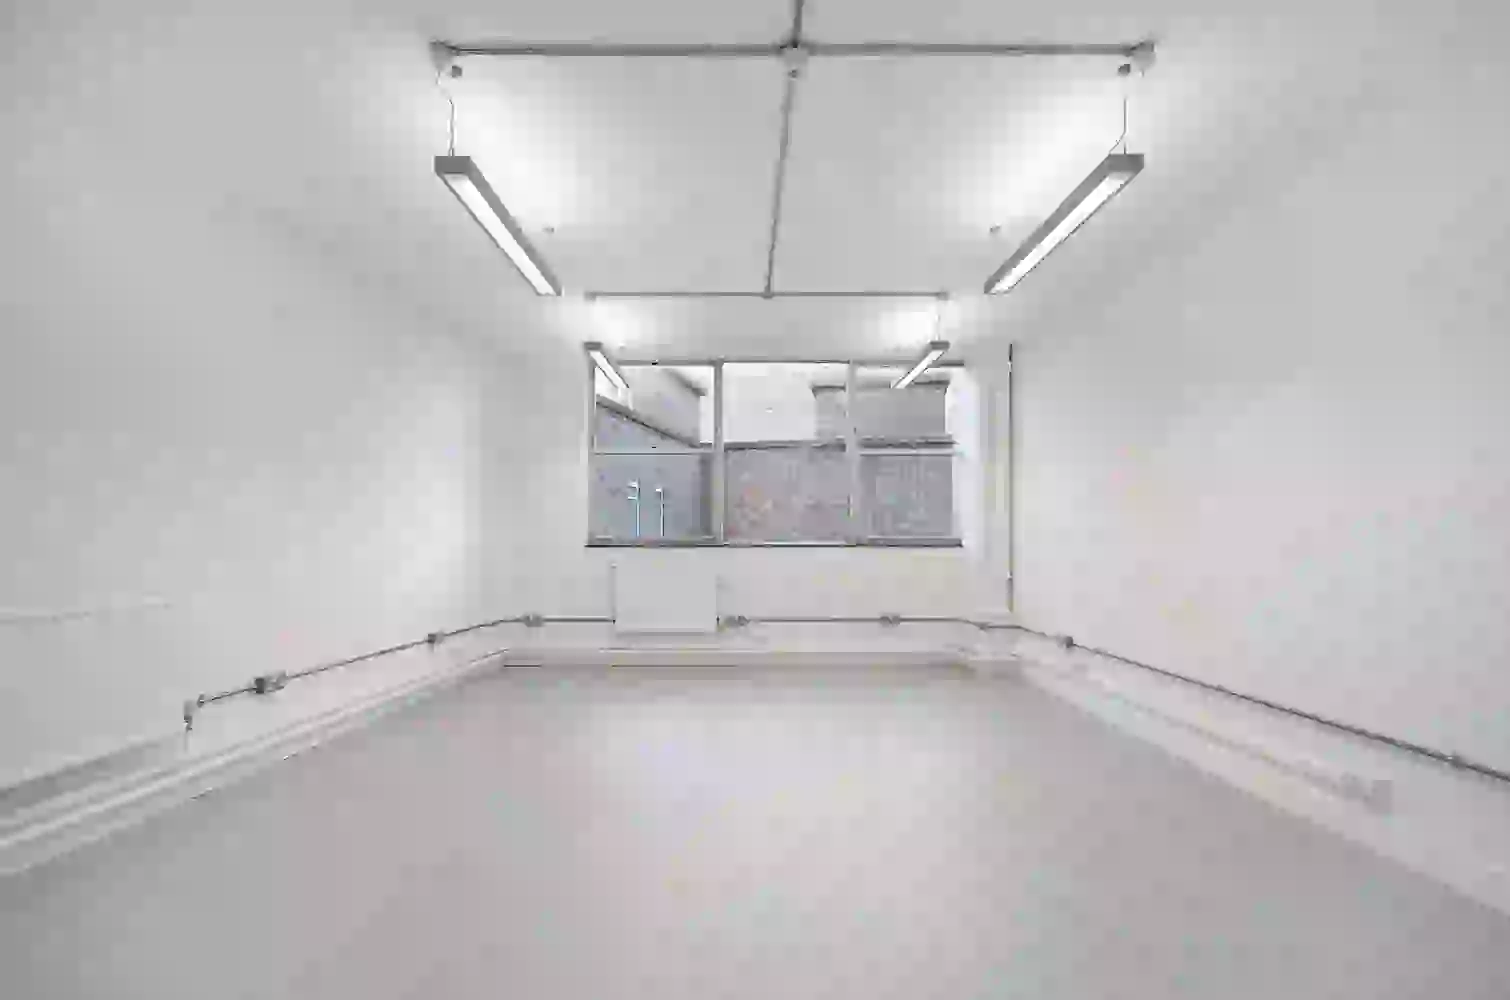 Office space to rent at E1 Studios, 3-15 Whitechapel Road, London, unit NH.309, 365 sq ft (33 sq m).